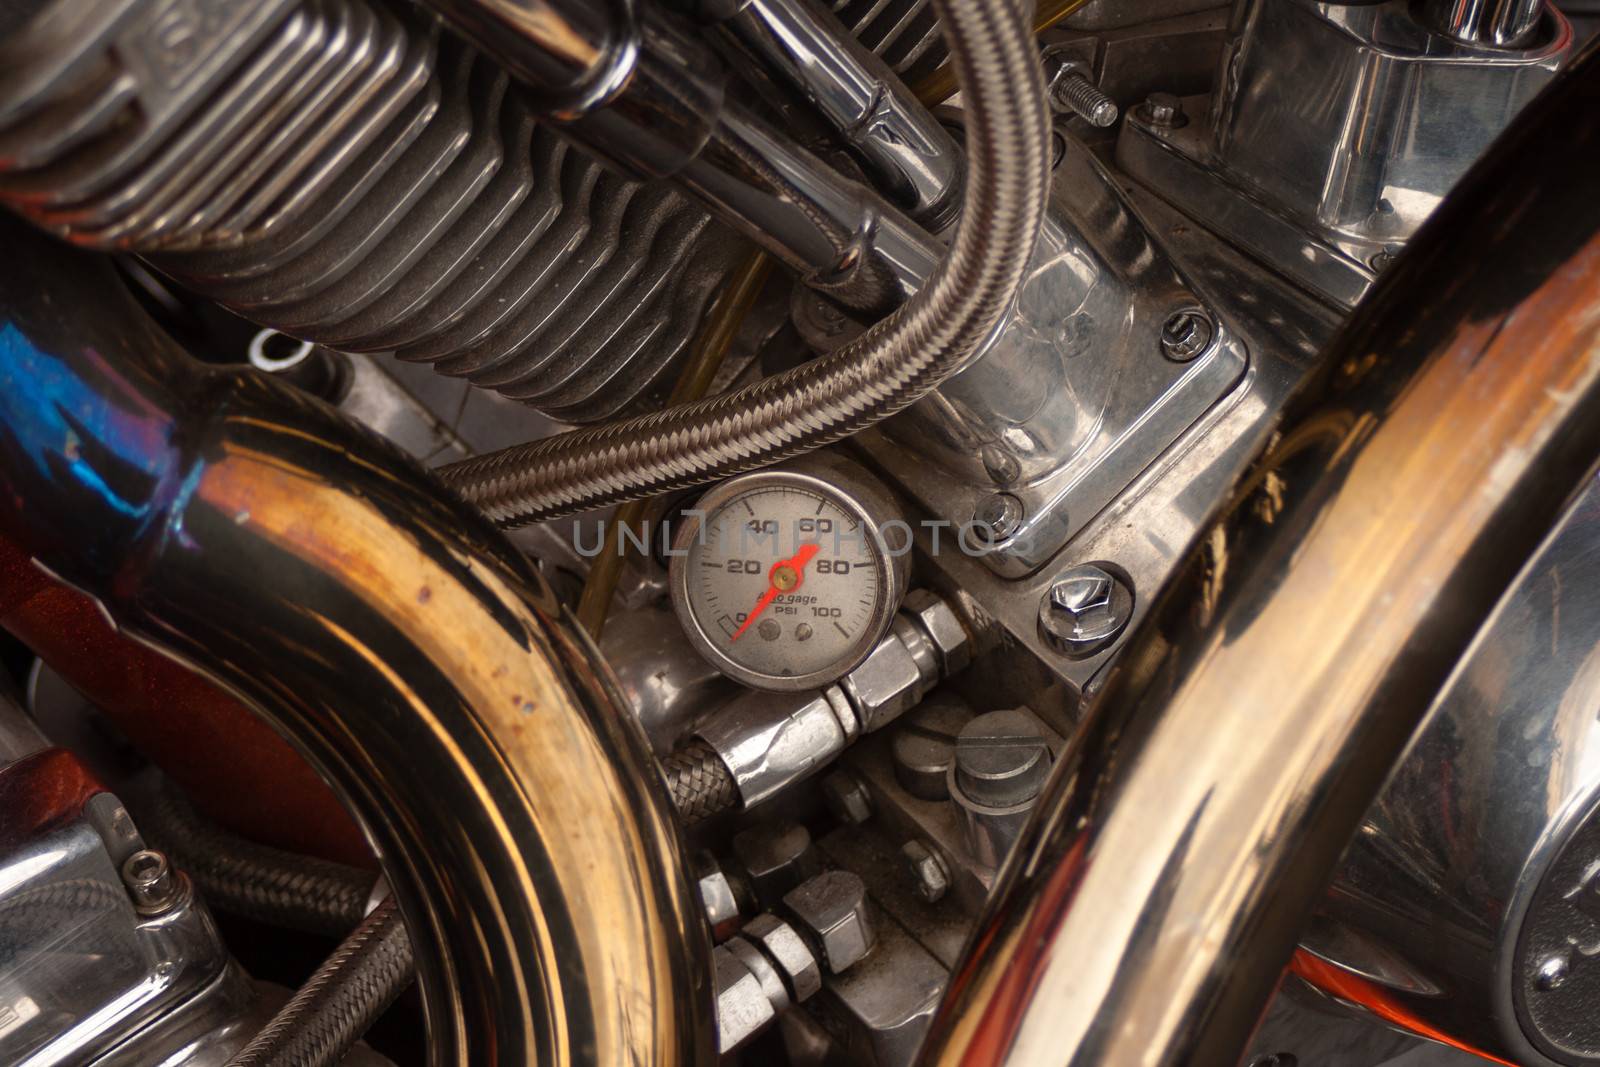 The big motorcycle engine chrome.